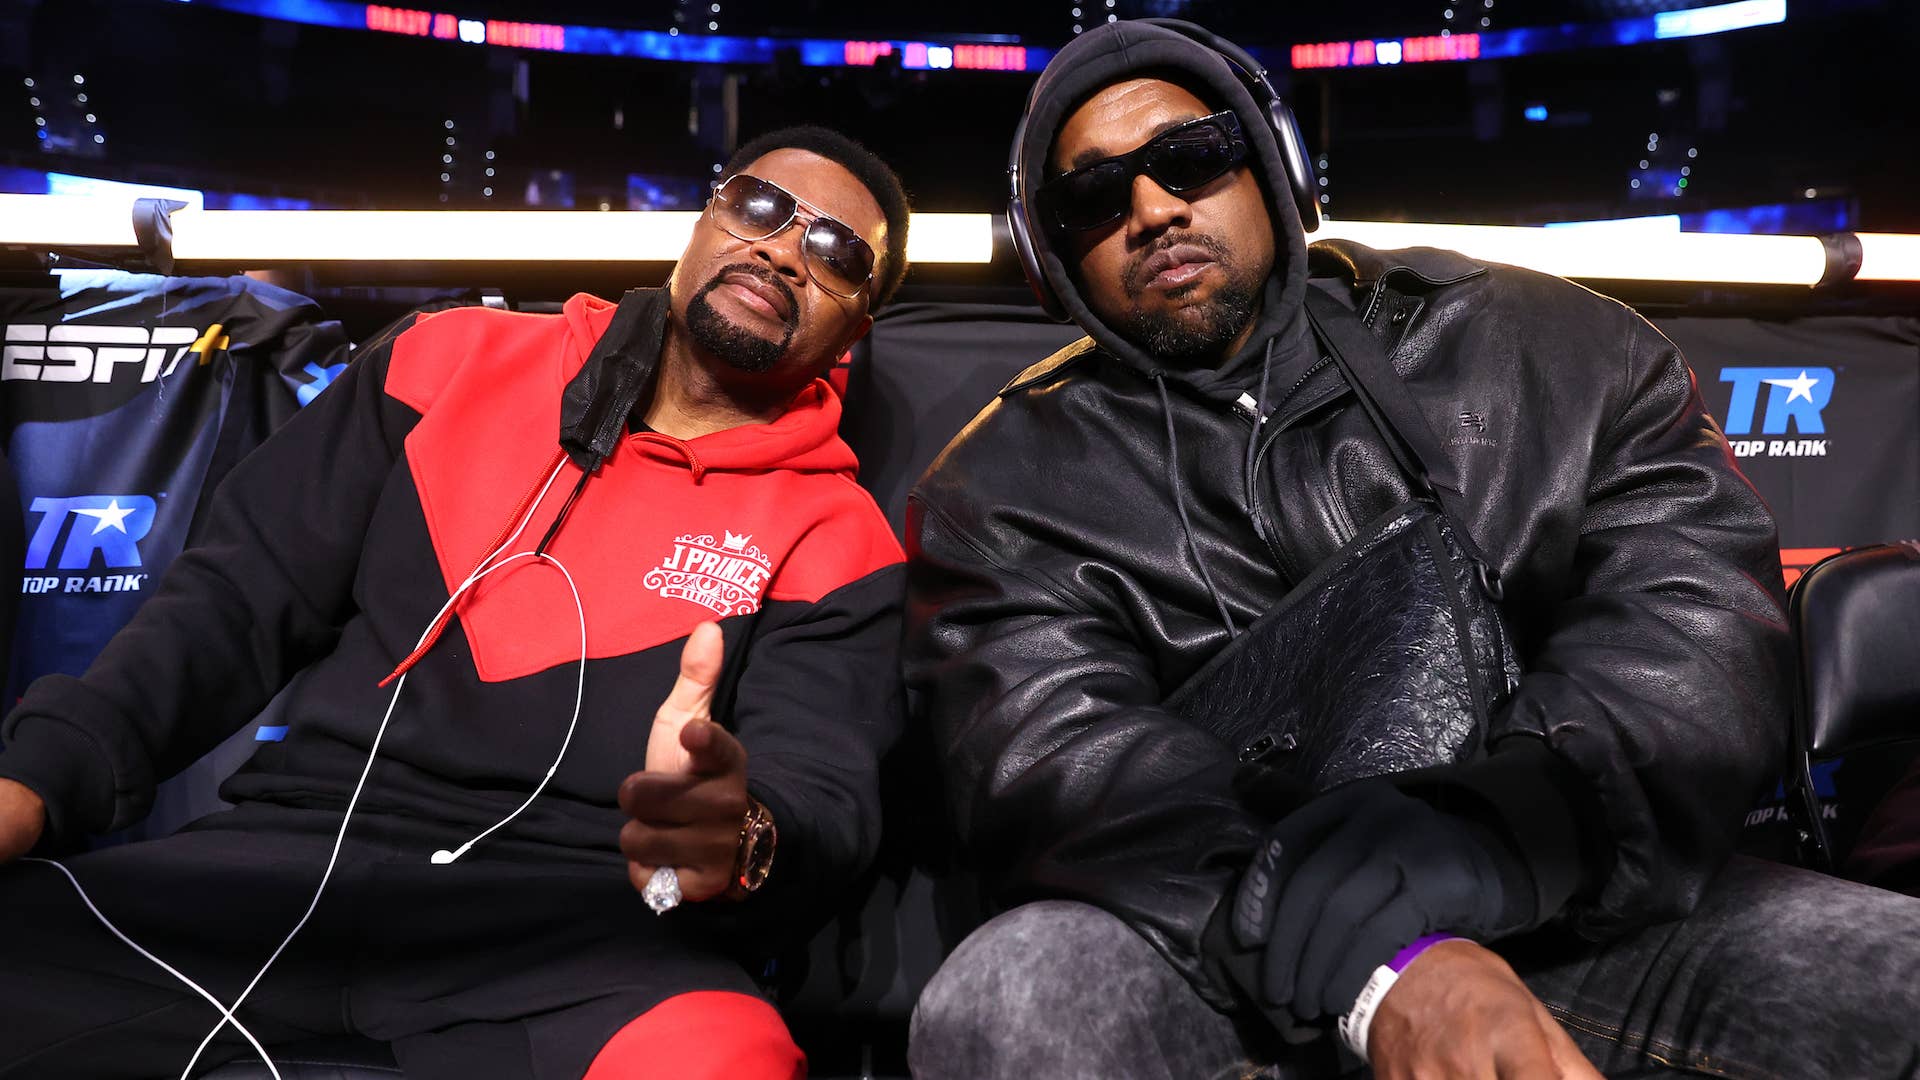 Kanye West and J Prince in Atlanta